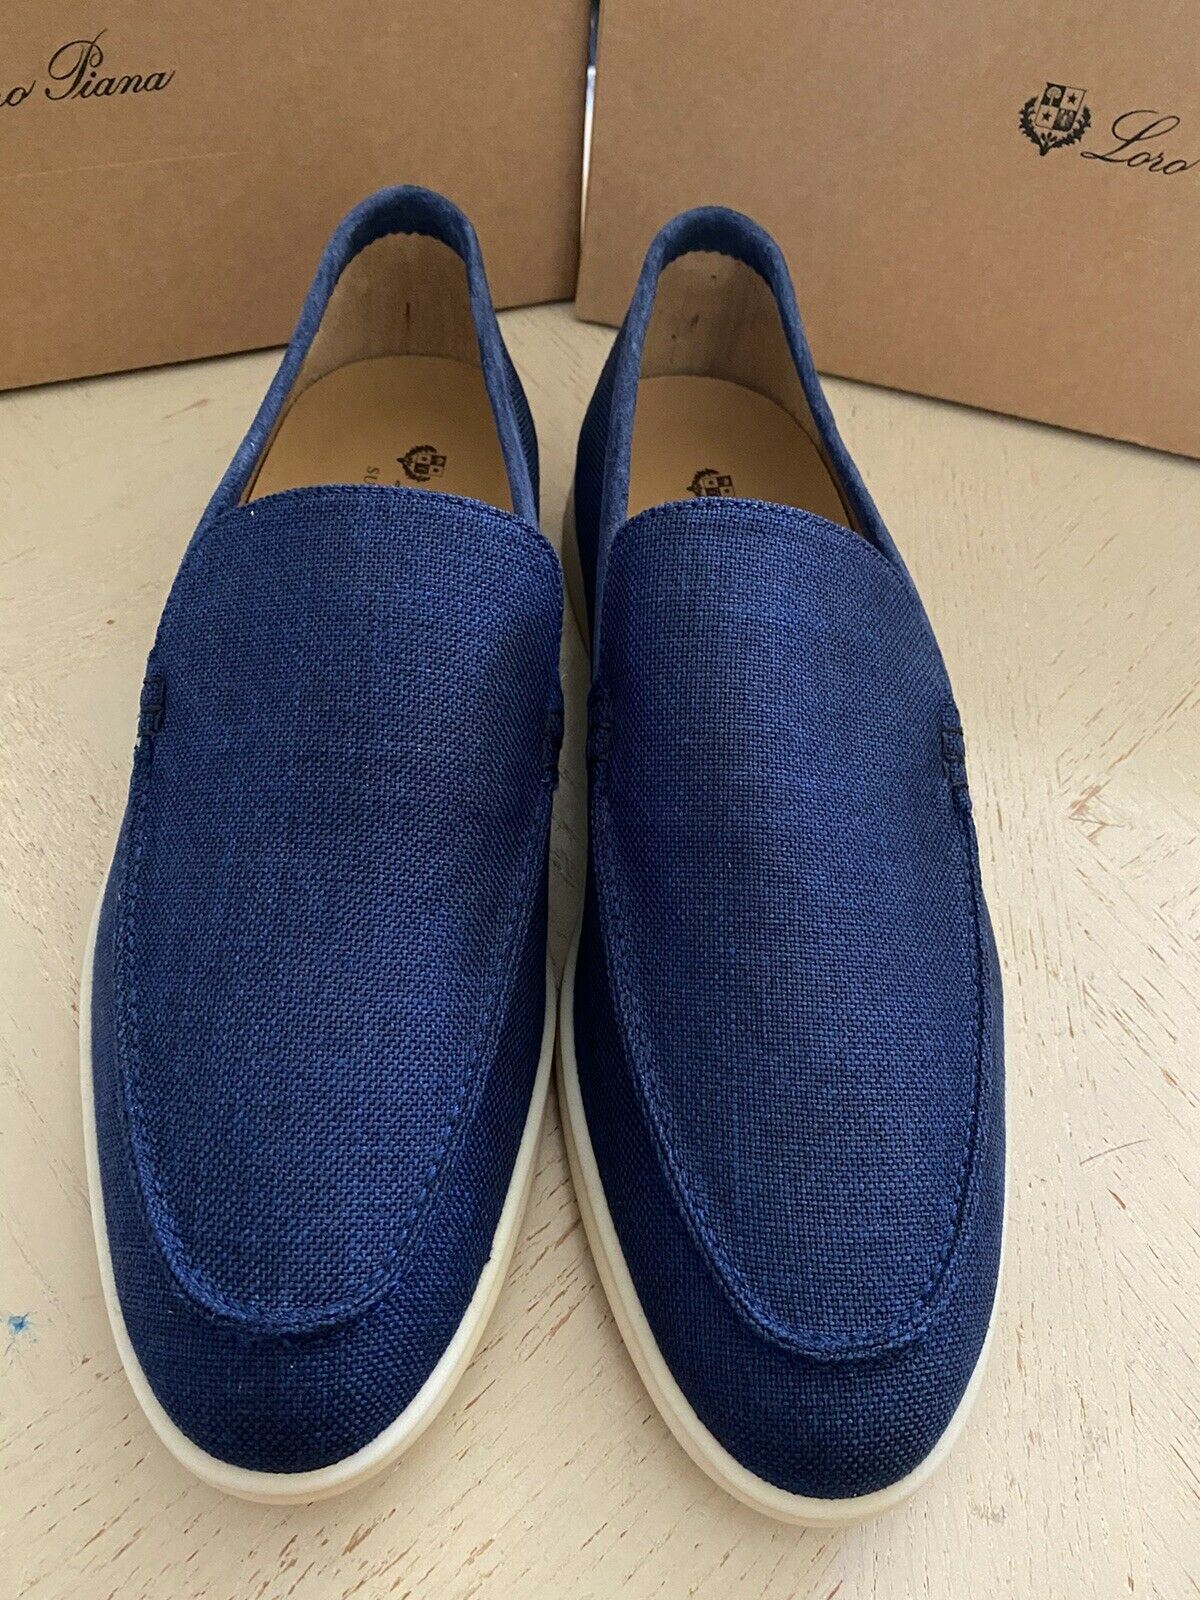 New $750 Loro Piana Men’s Canvas/Suedy Loafers Shoes Blue 13 US/46 Eu Italy